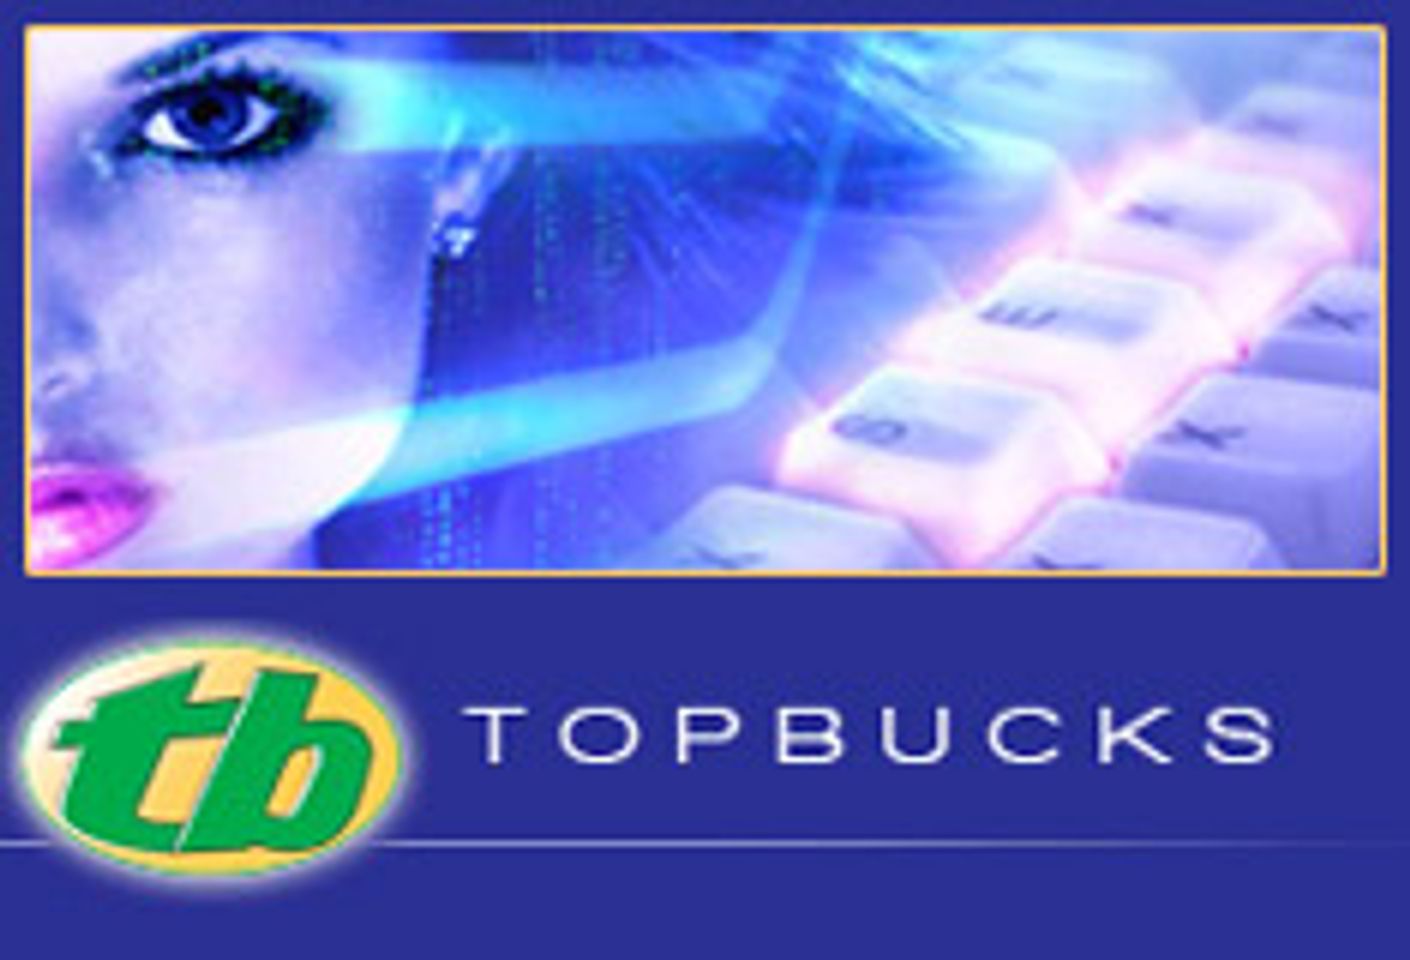 TopBucks Adds New Webmaster Forum